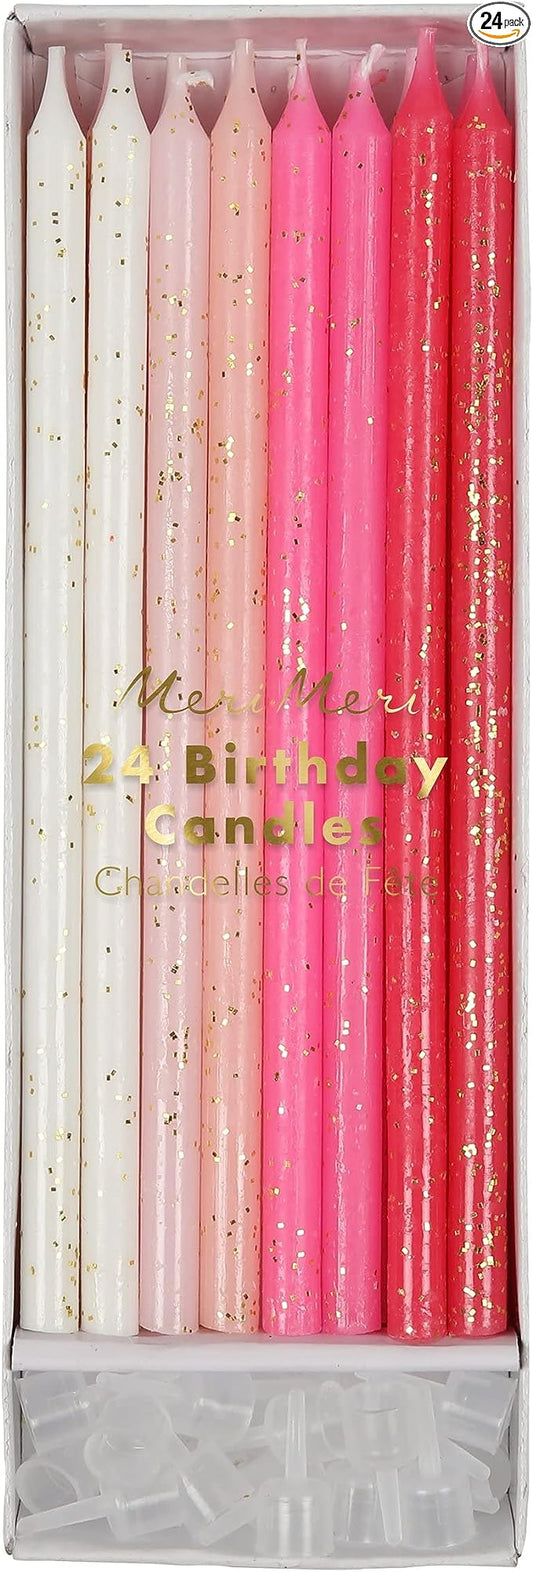 Meri Meri - Pink Glitter Candles